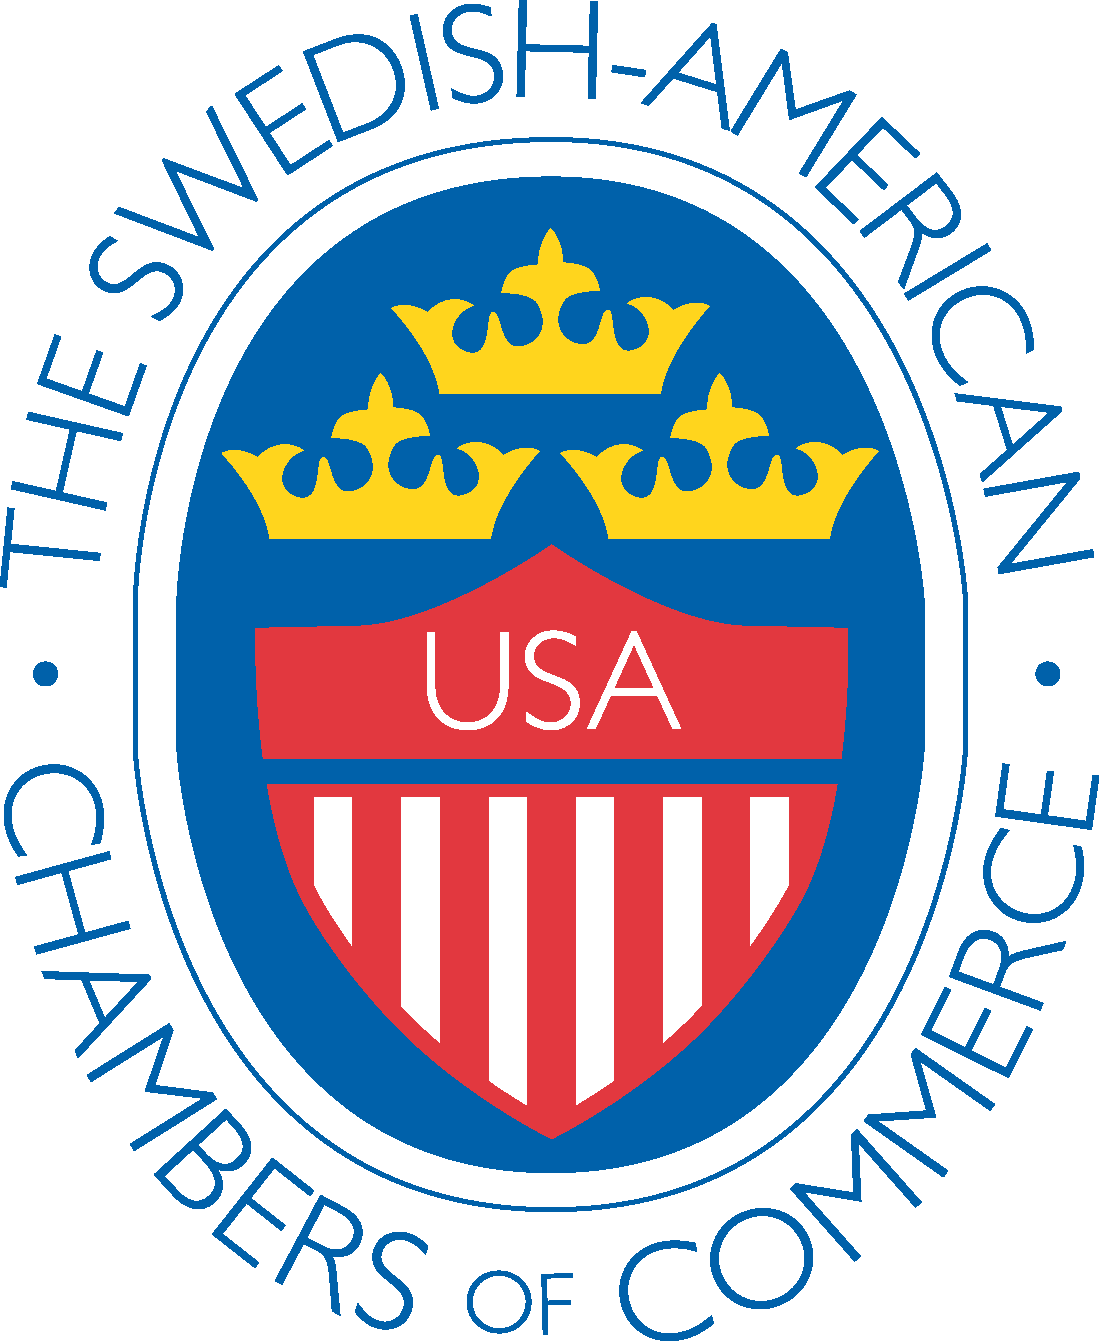 The Swedish American Chambers of Commerce Logo